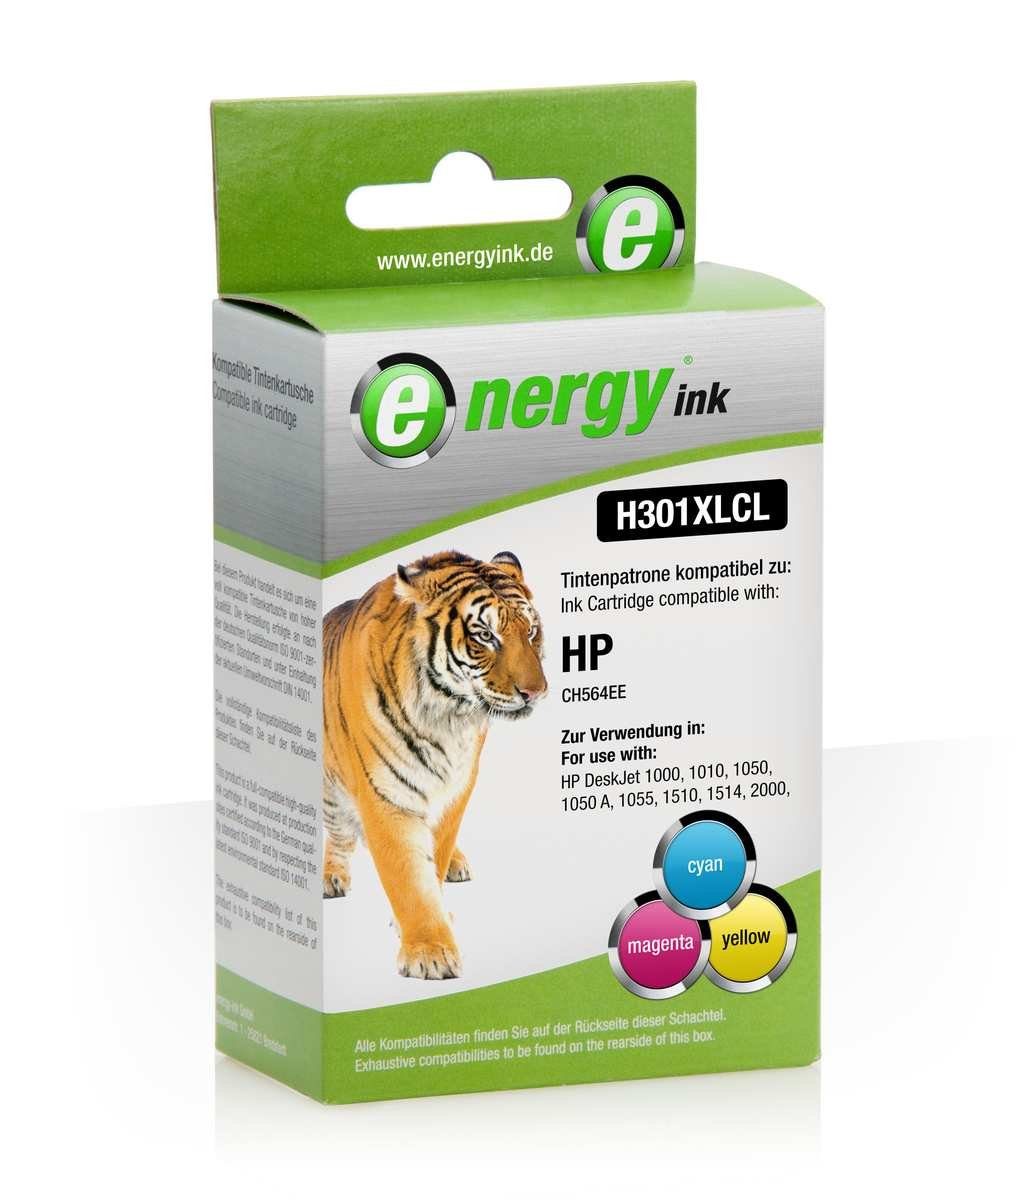 Energy-ink H301CL Tintenpatrone